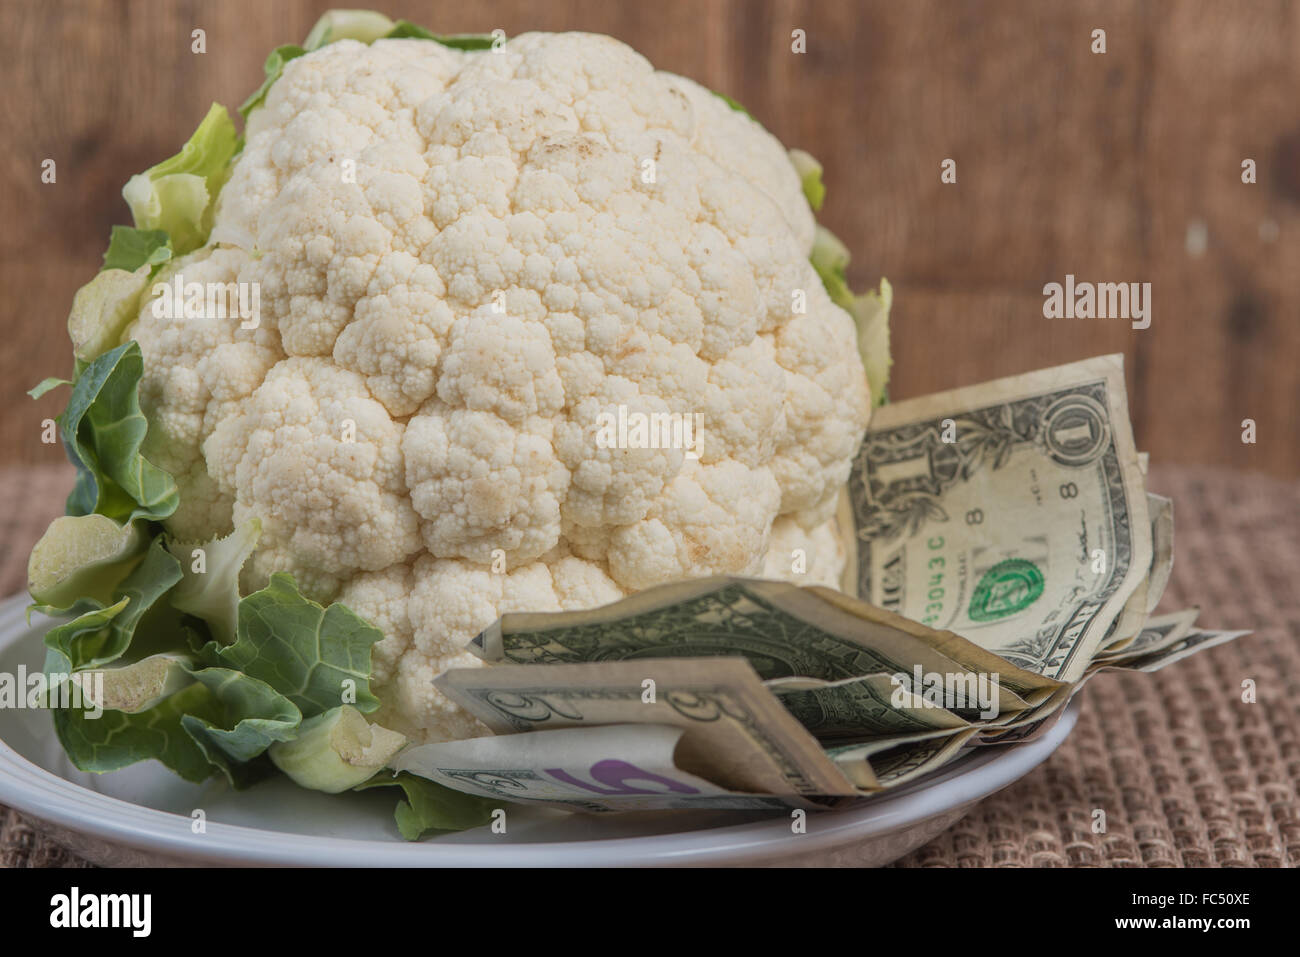 Head of cauliflower on a plate Stock Photo